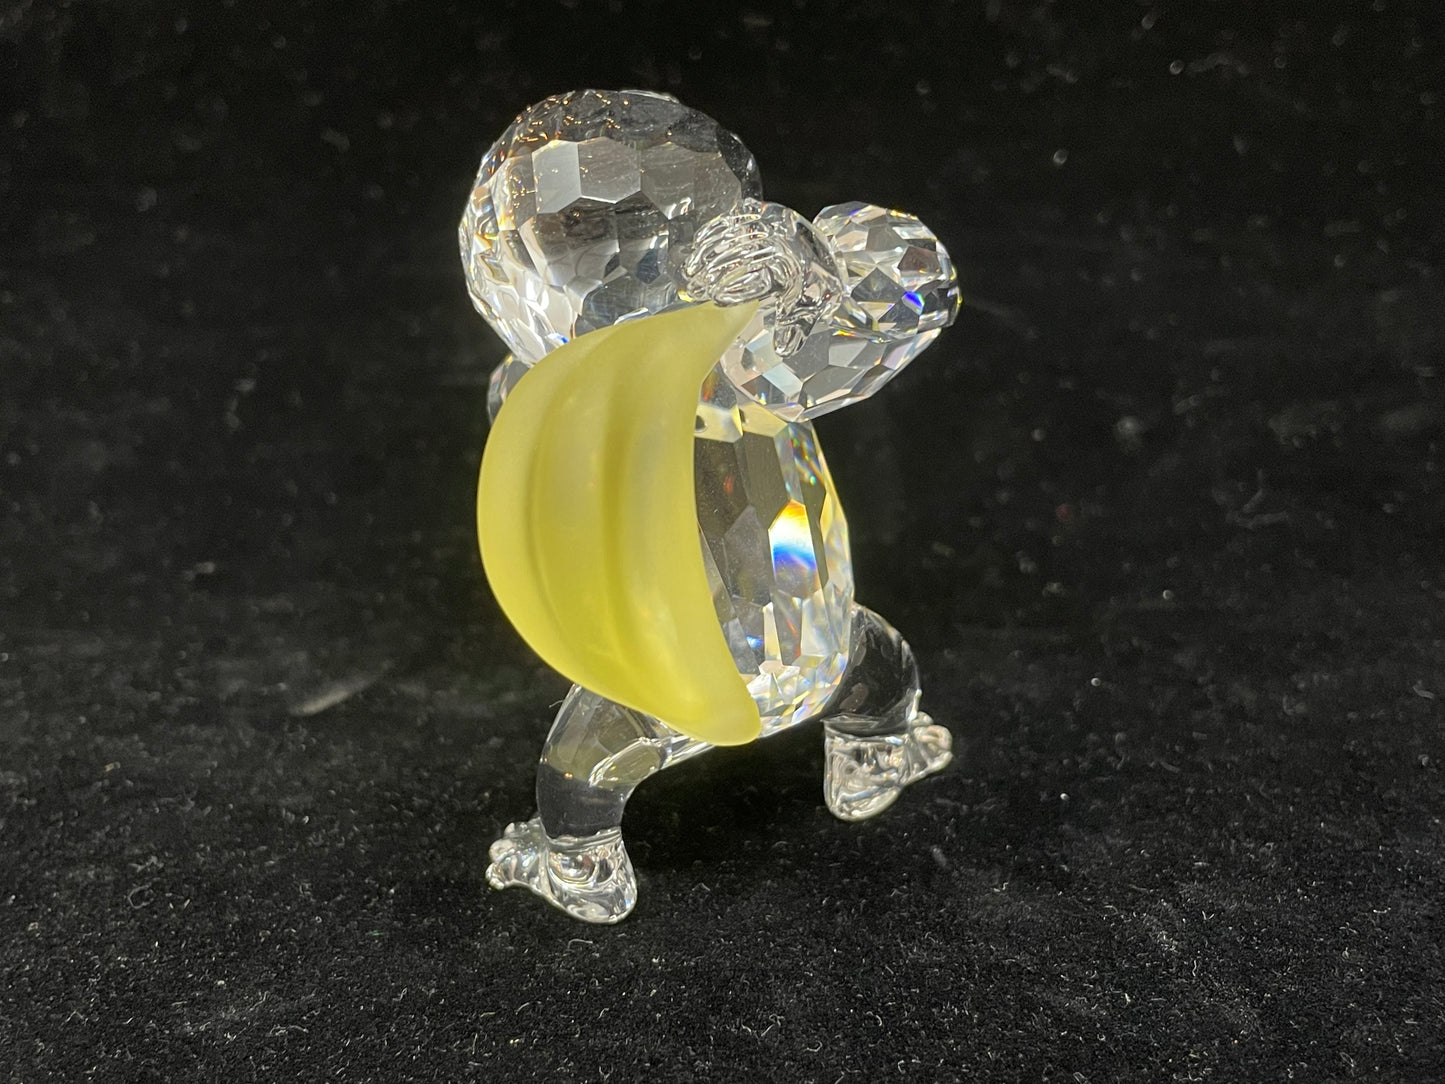 Swarovski "Young Gorilla with Bananas" Crystal Figurine